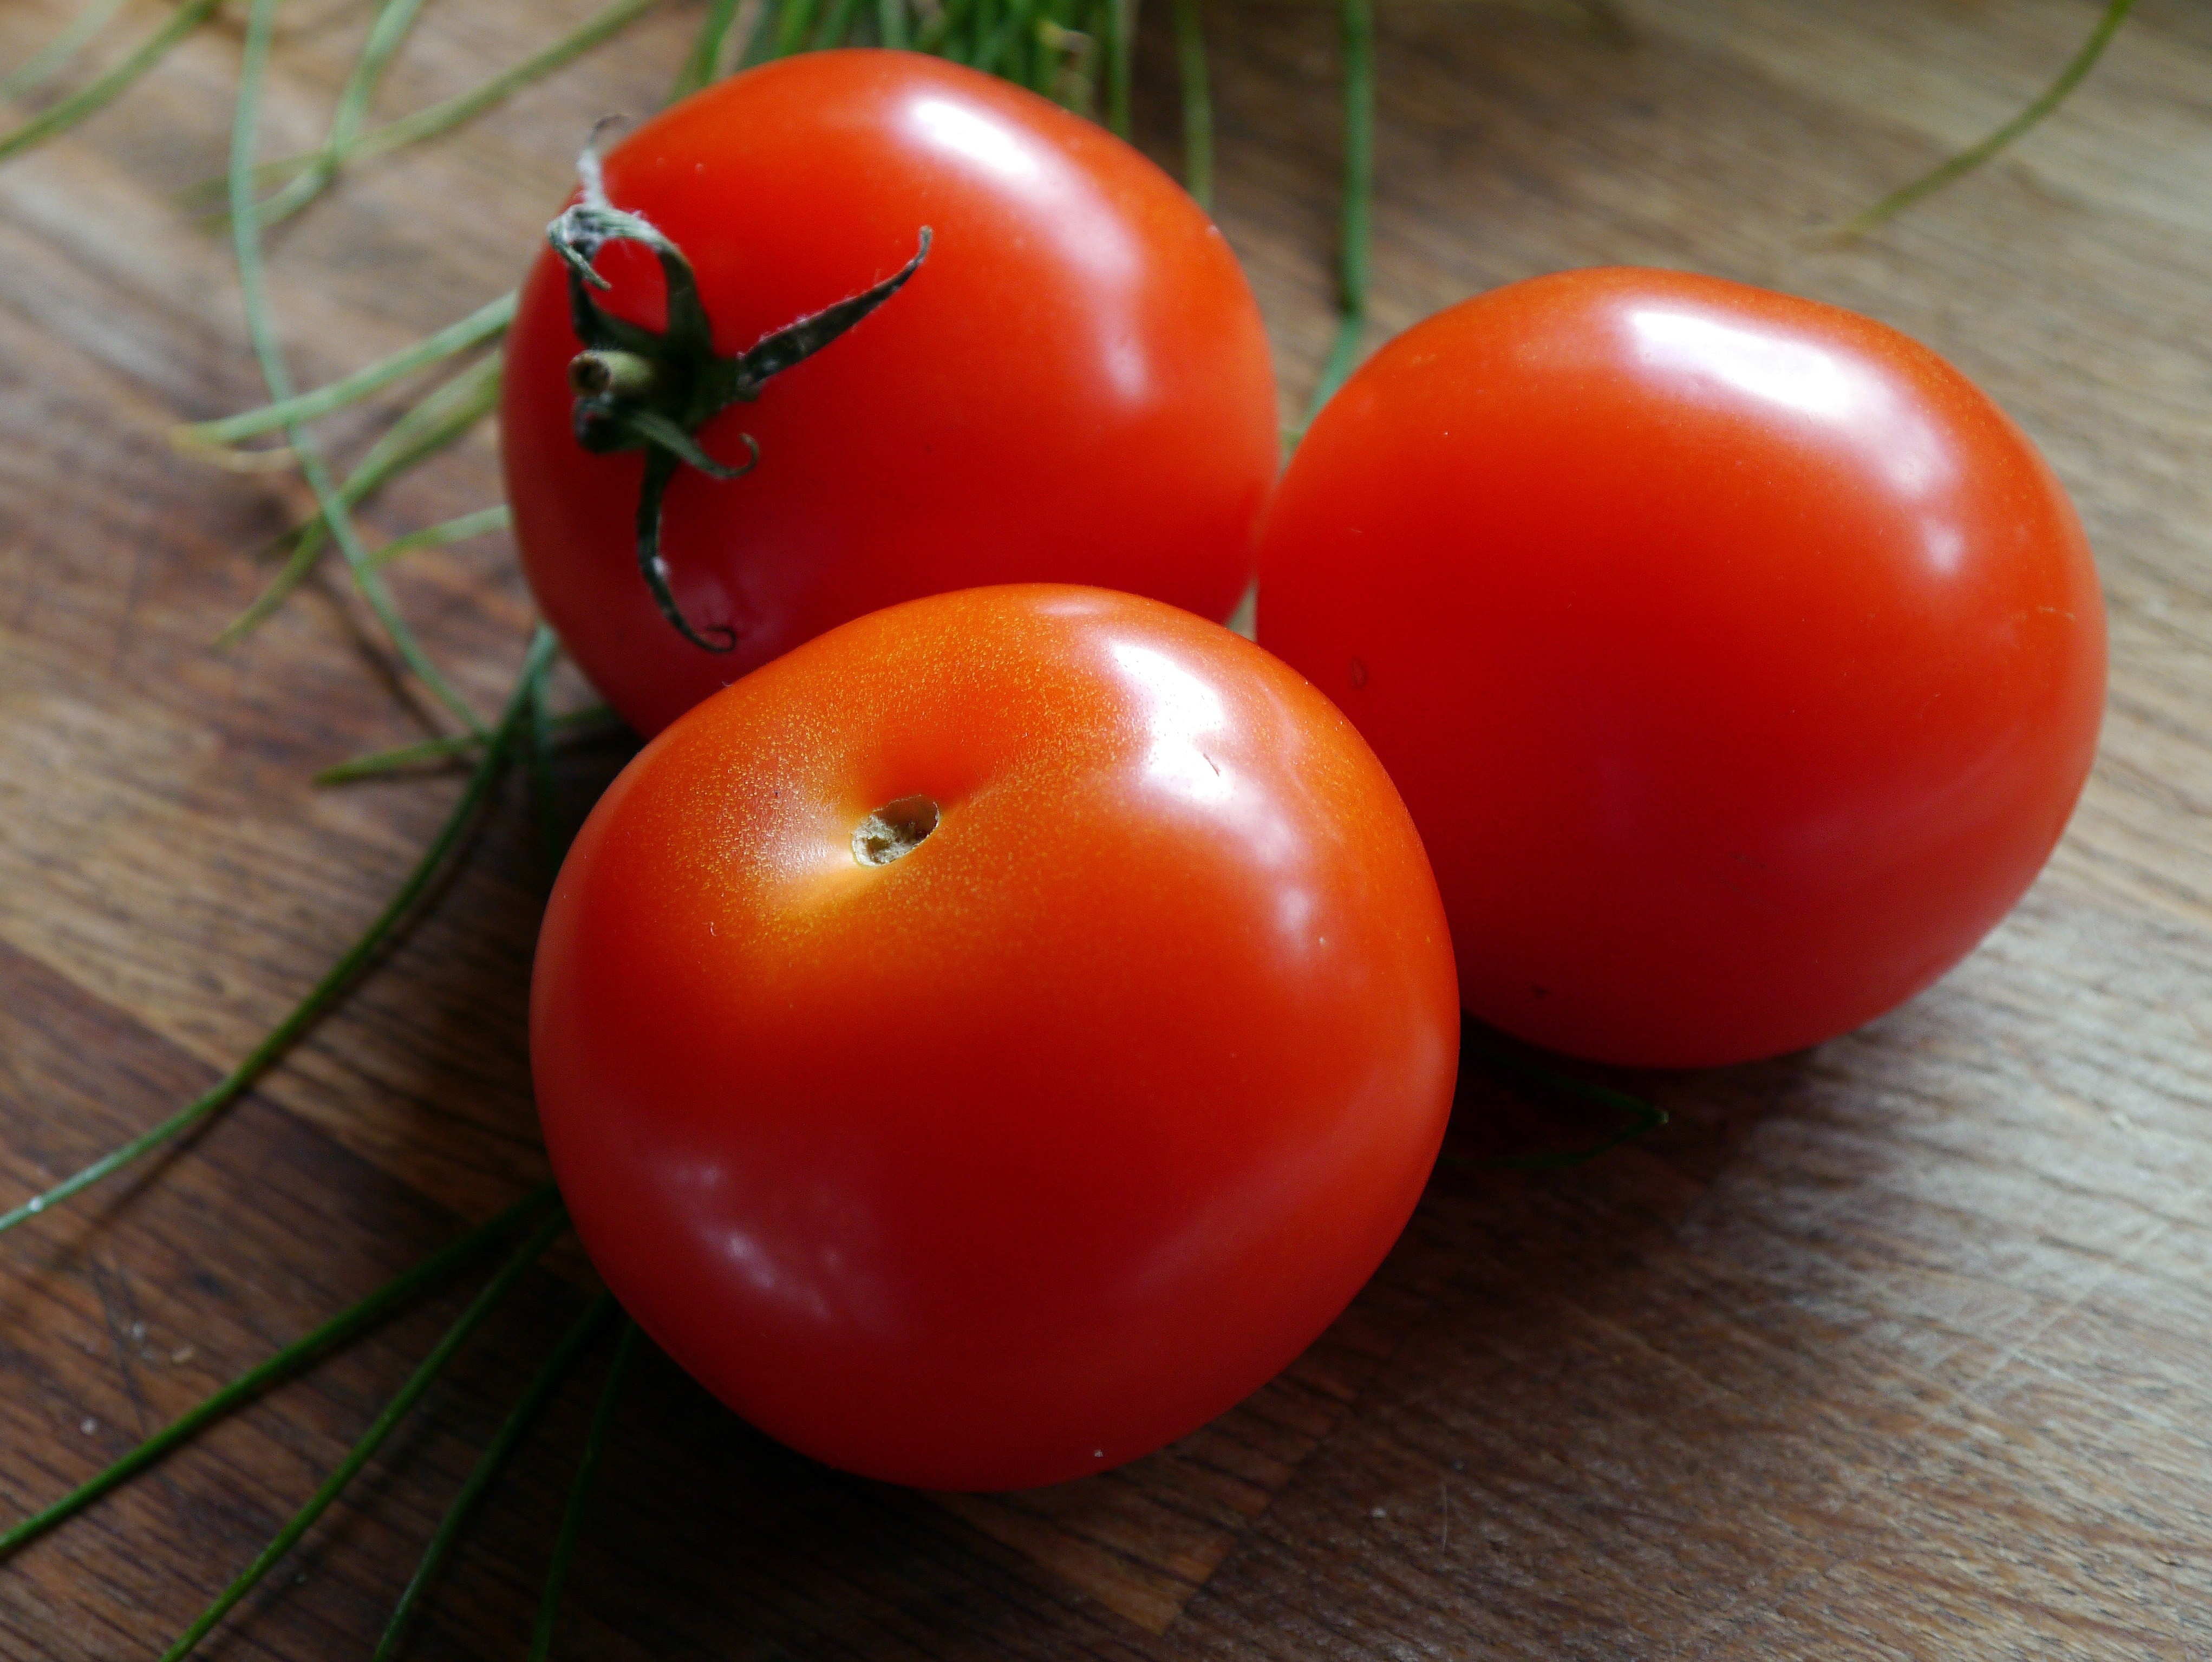 3 tomatoes